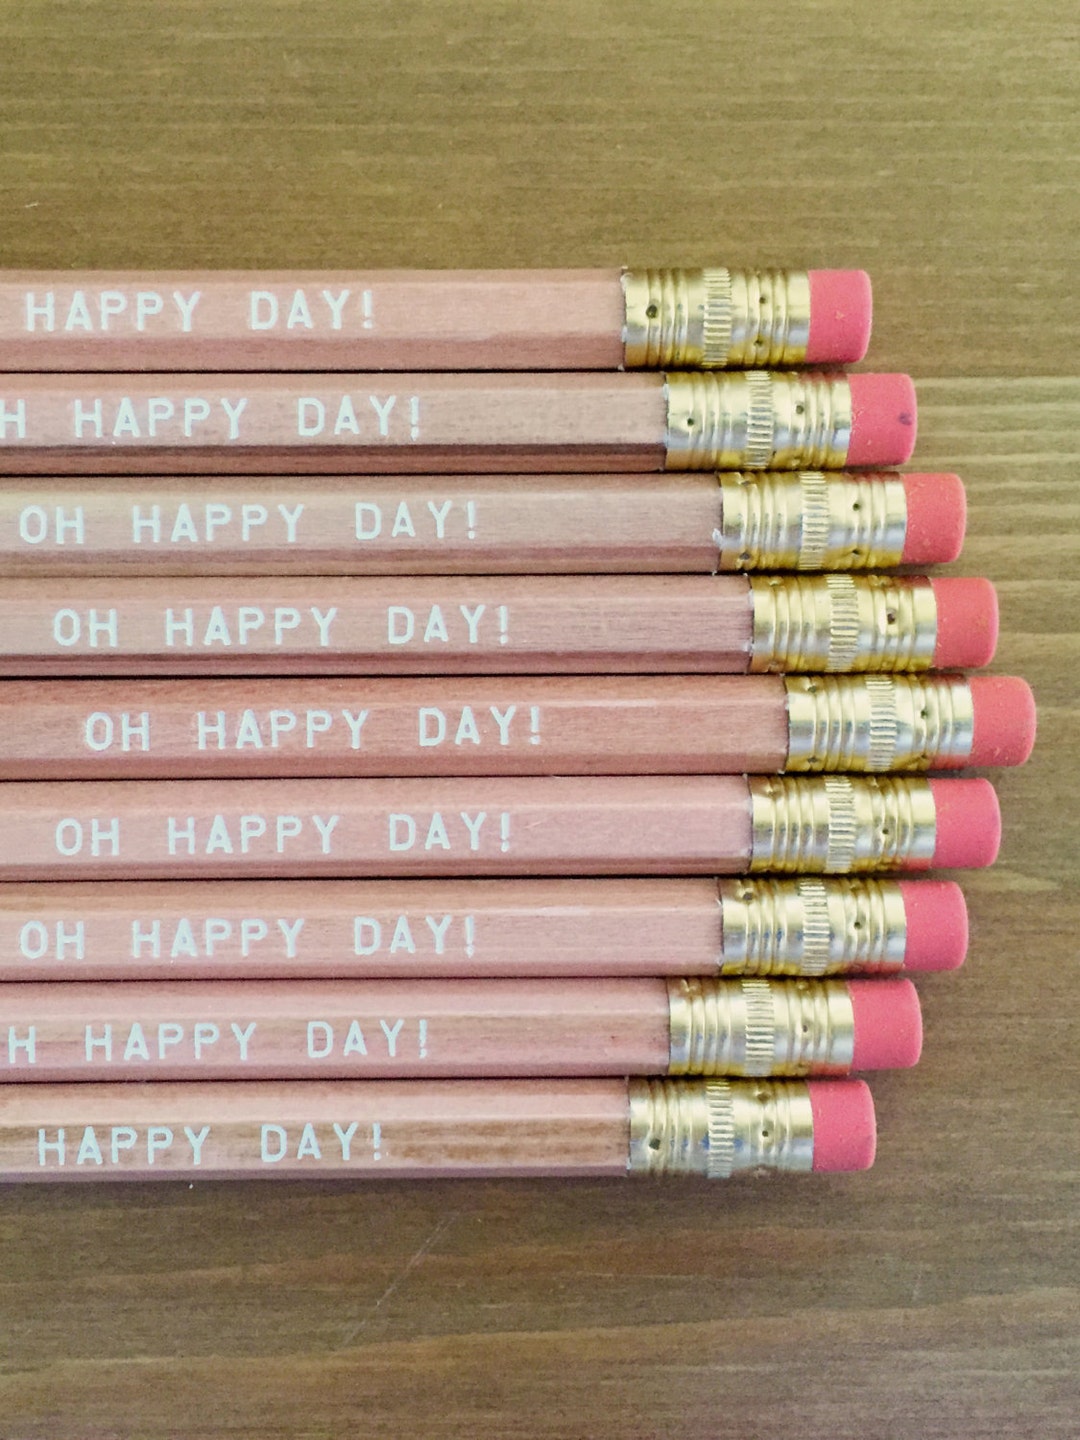 6 - Happy Birthday #2 Wooden Pencils - Party Favor - School Church Teacher